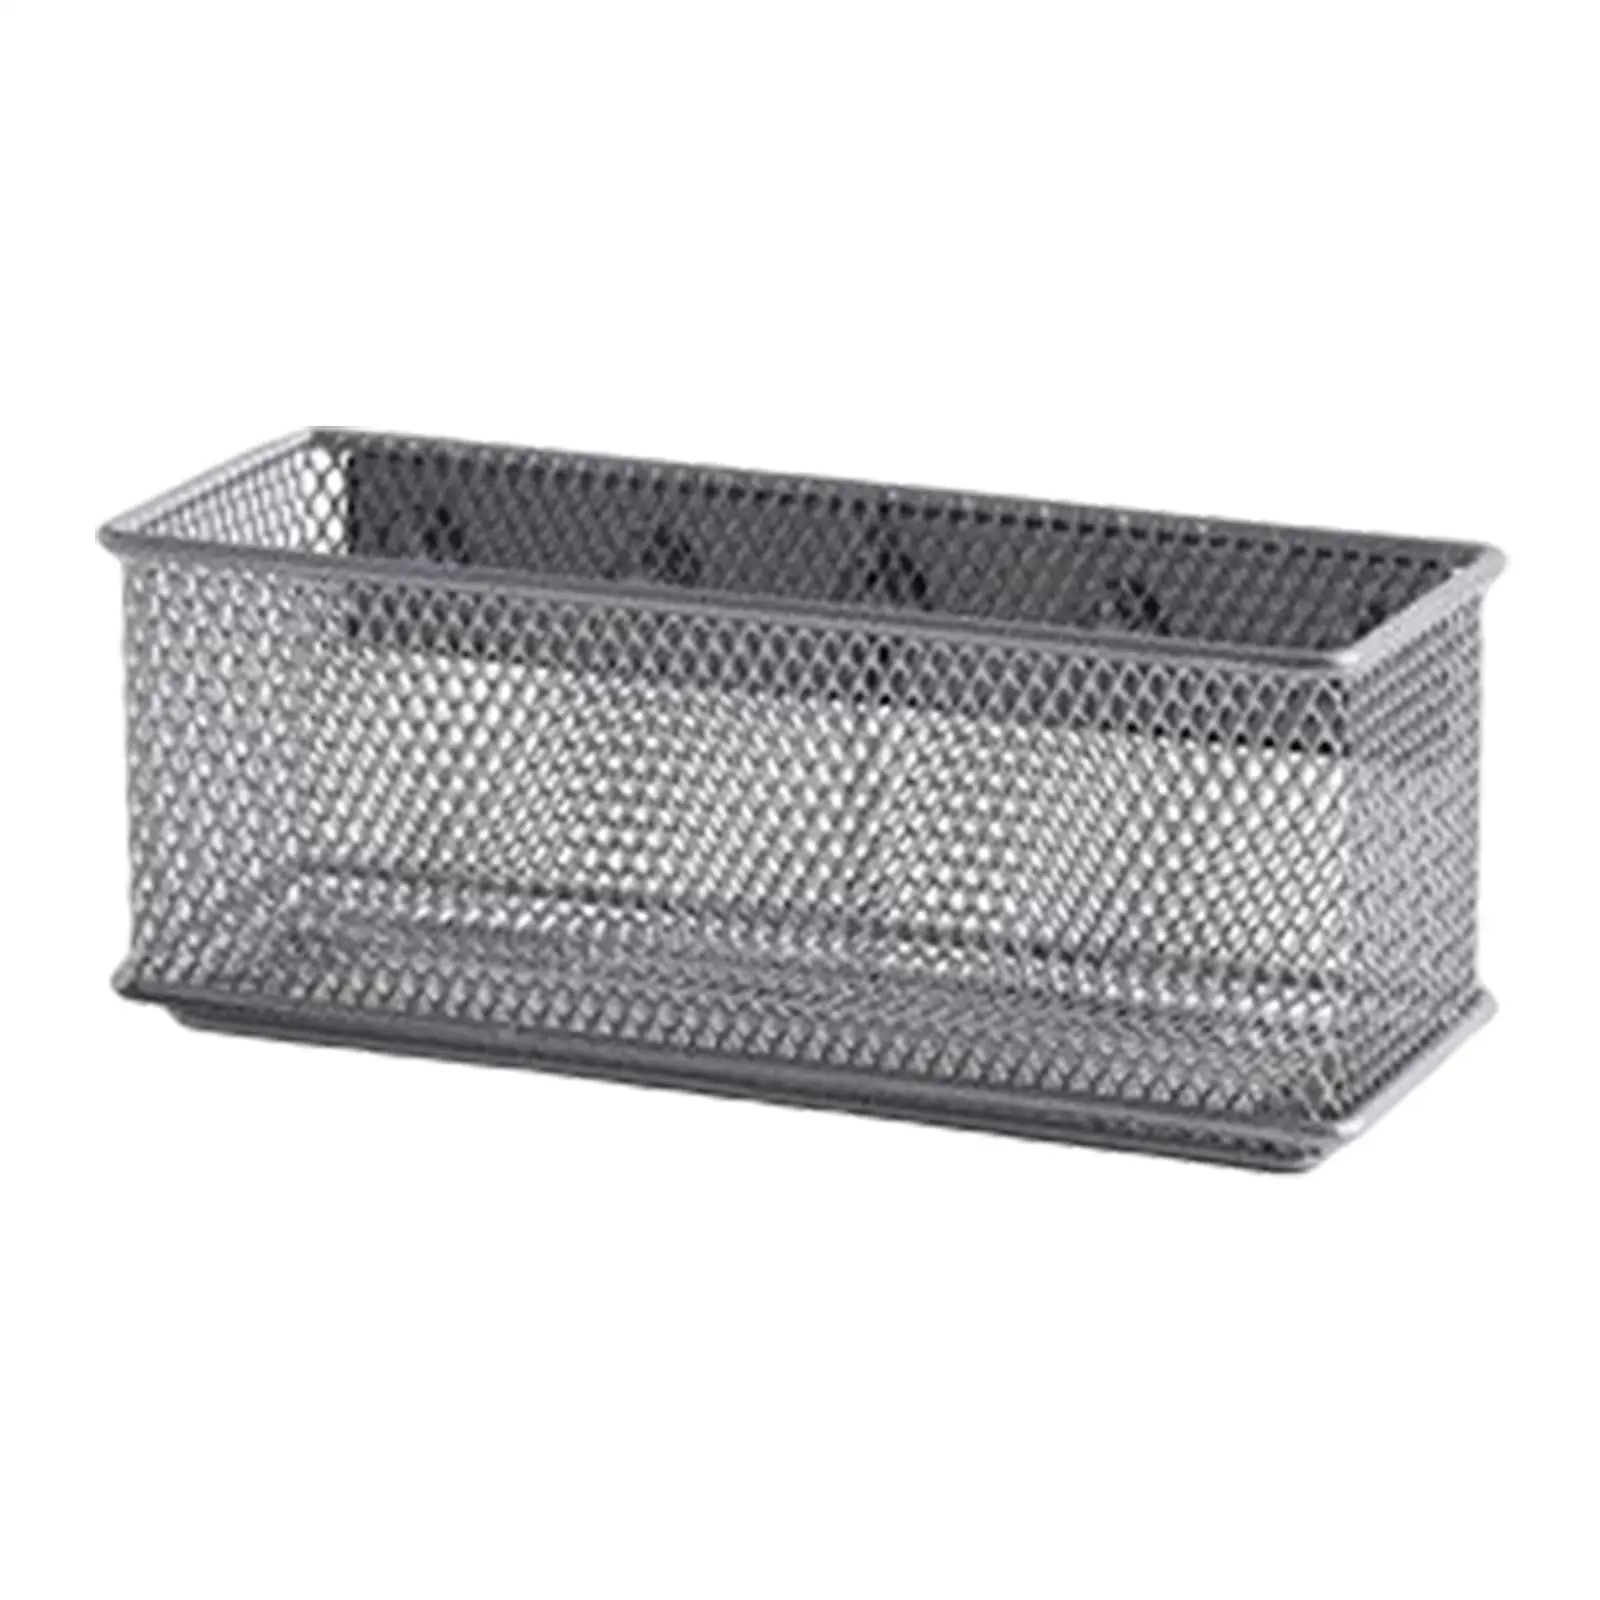 Refrigerator  Magnetic Storage Basket, Pen  Office Supply Whiteboard  Organization Desk Tray Organizer